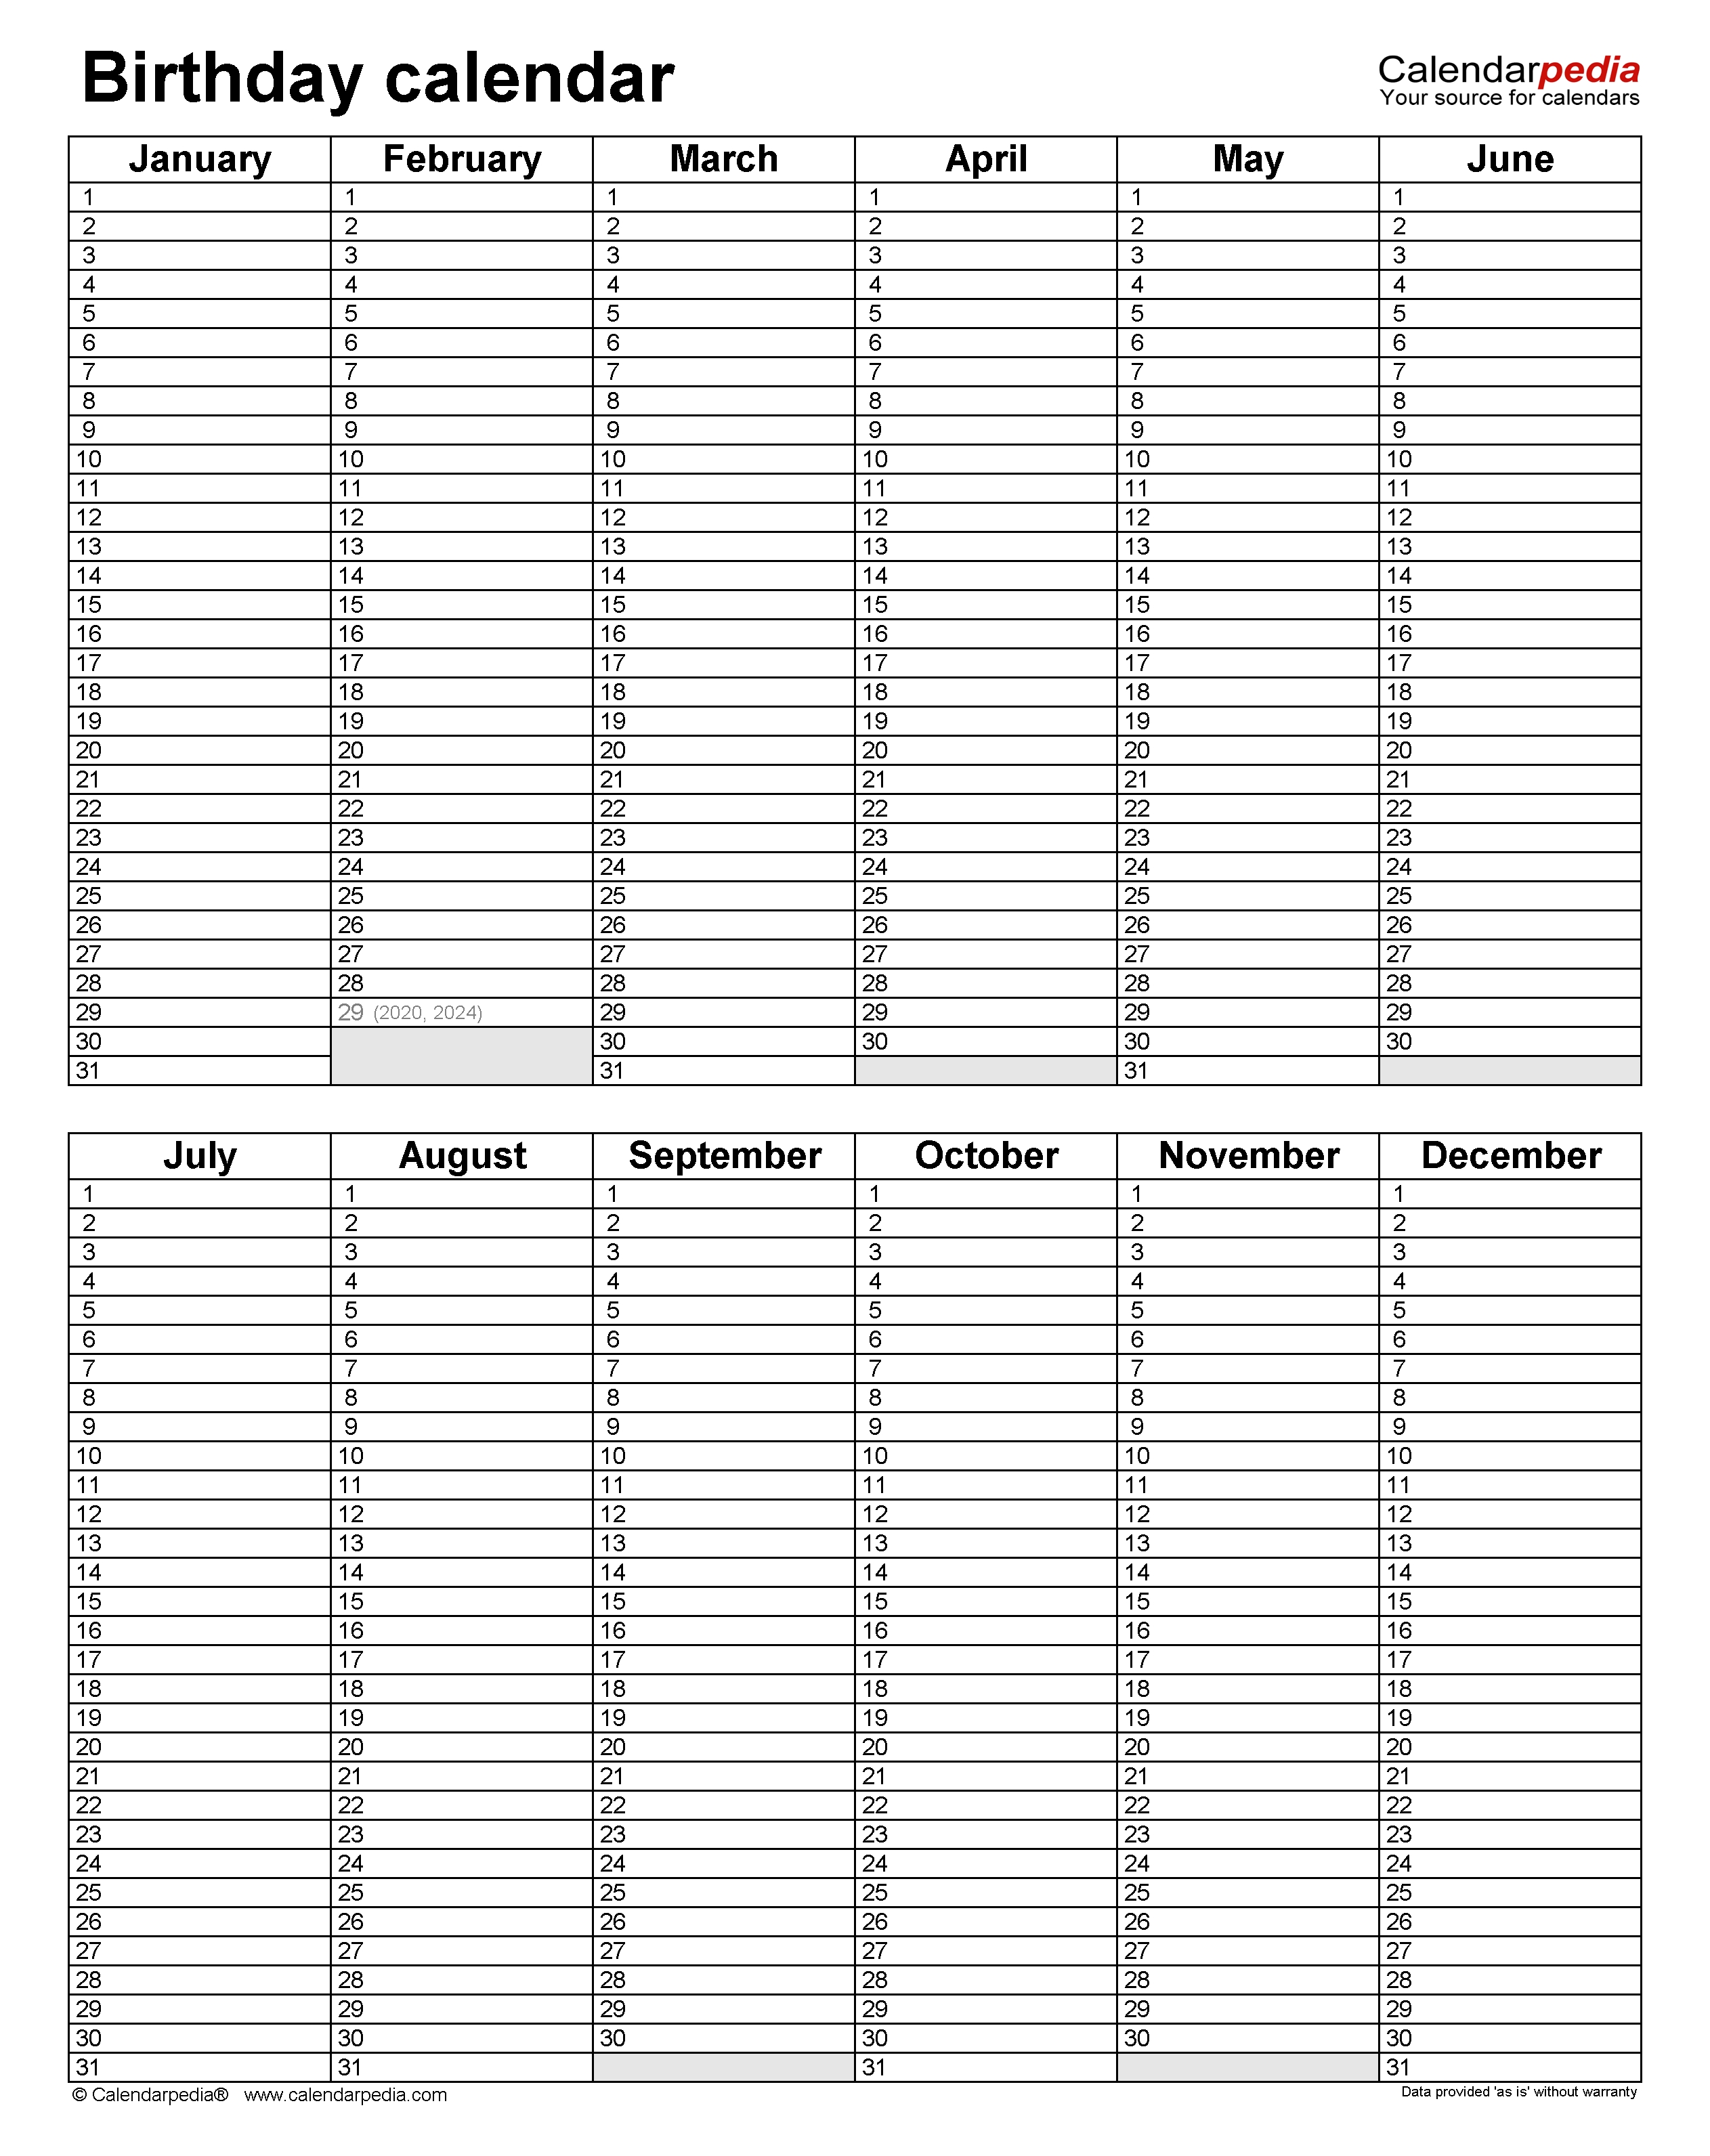 Birthday Calendars - Free Printable Microsoft Excel Templates